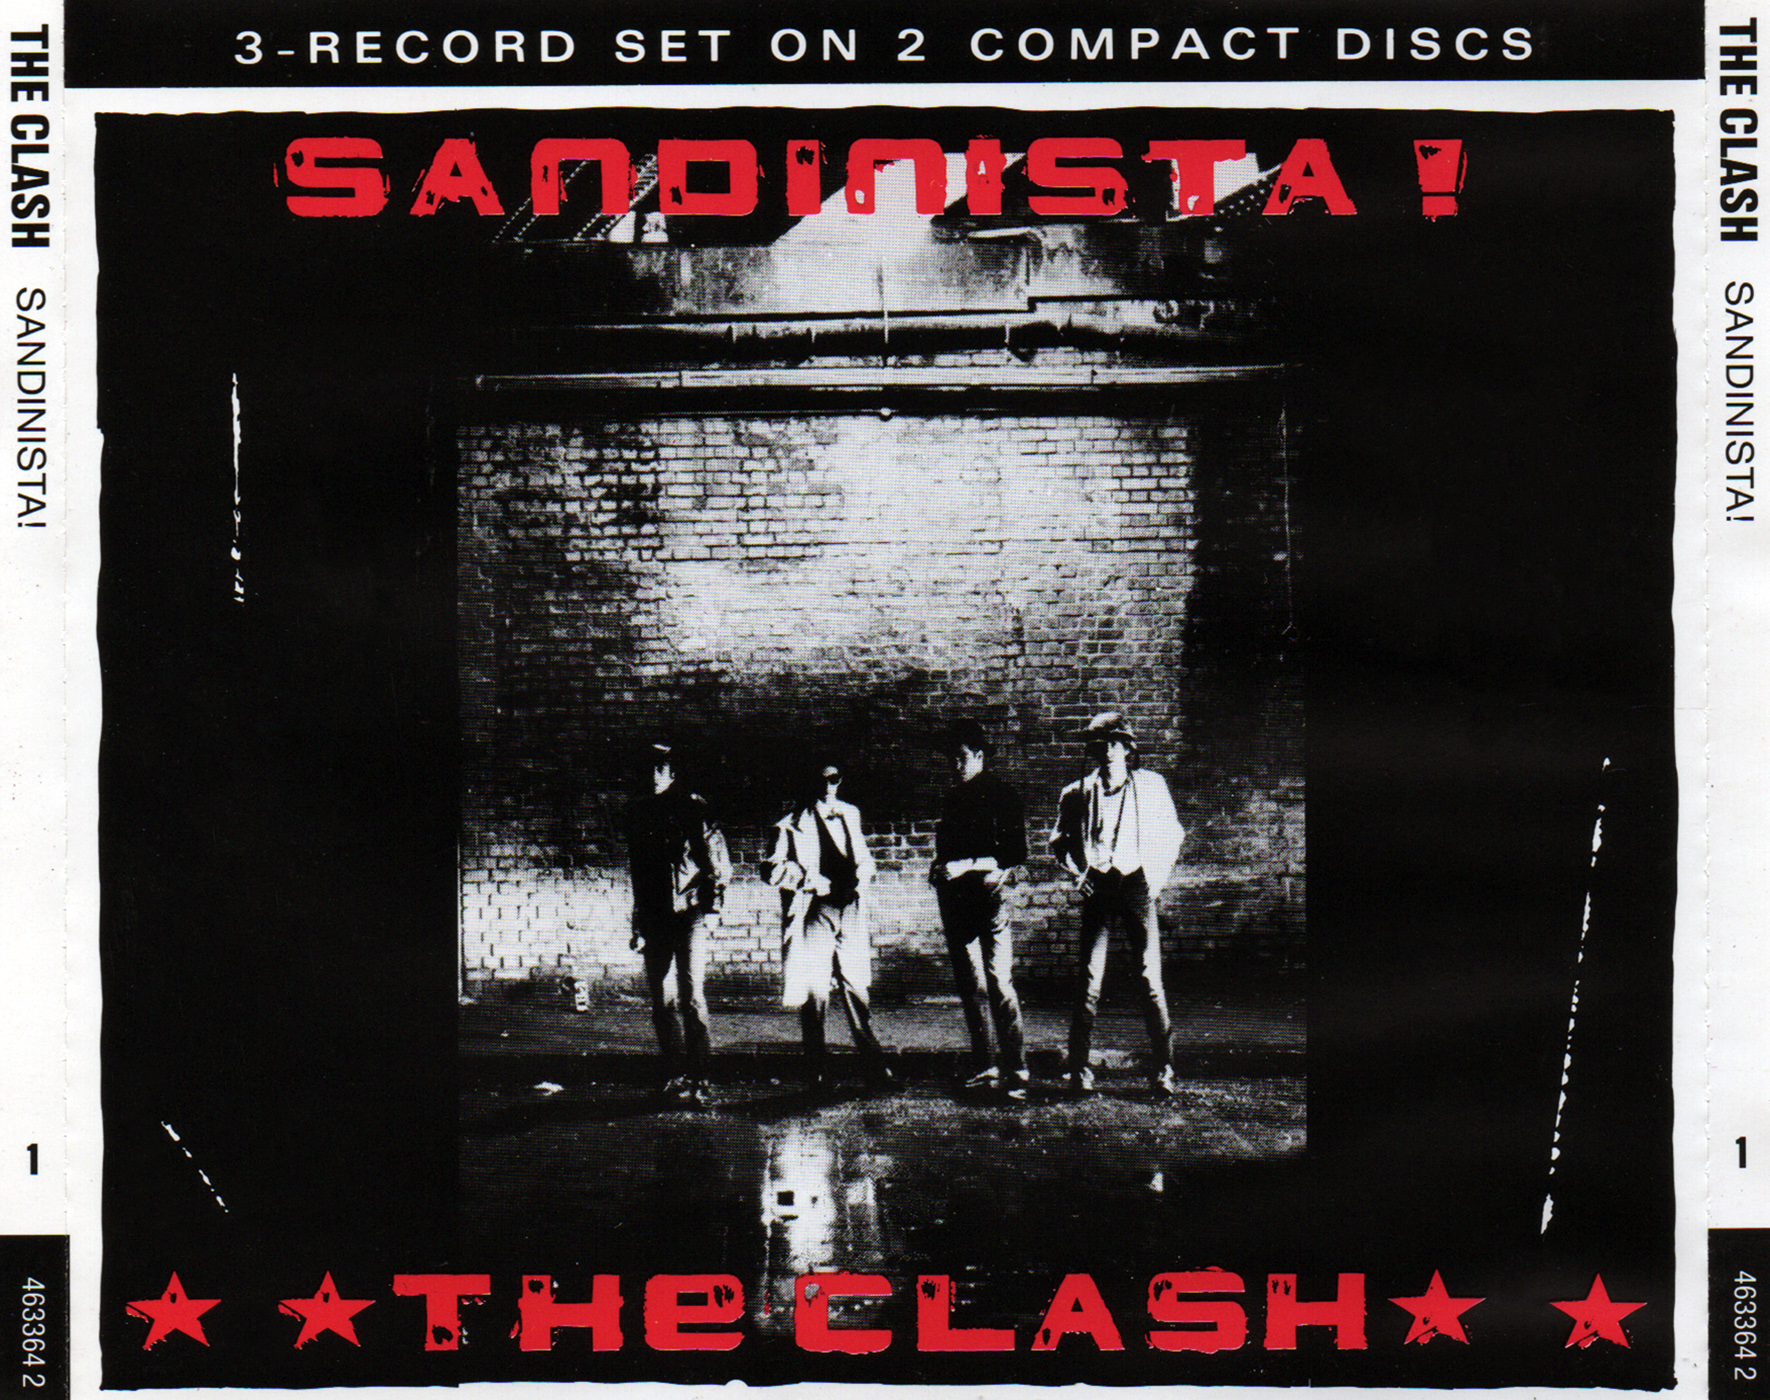 The Clash - 1980 - Sandinista